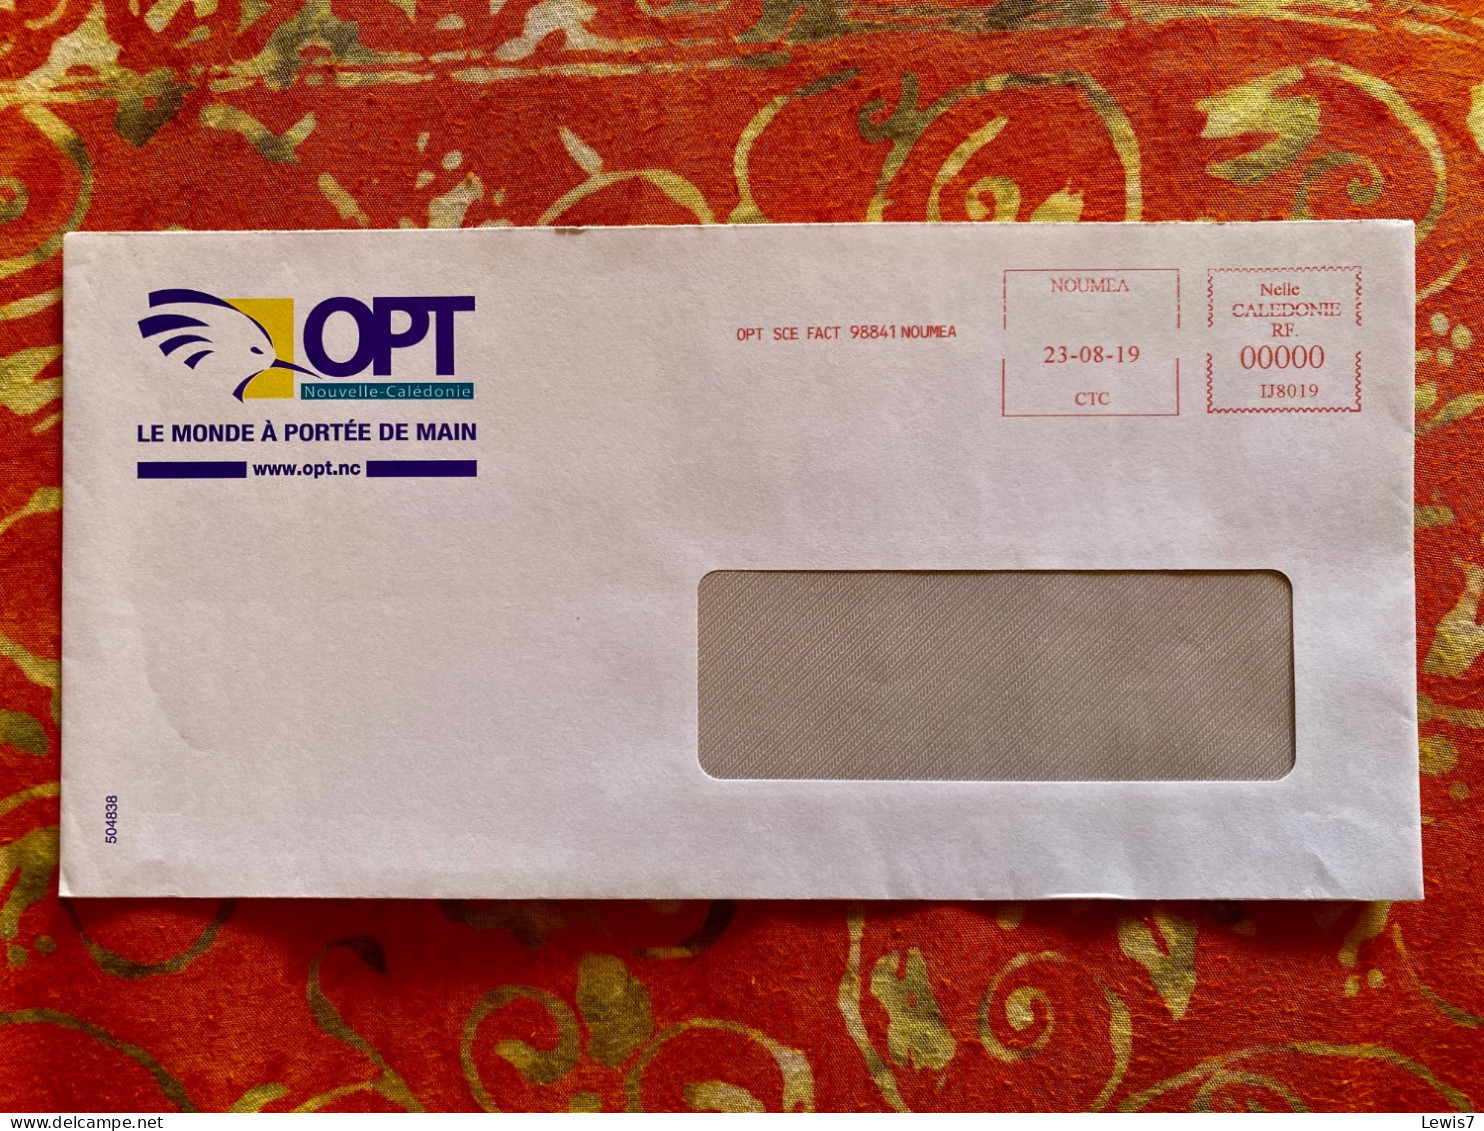 Enveloppe + Logo Cagou + Obliteration Tampons Rouges - NOUVELLE-CALEDONIE - Lettres & Documents